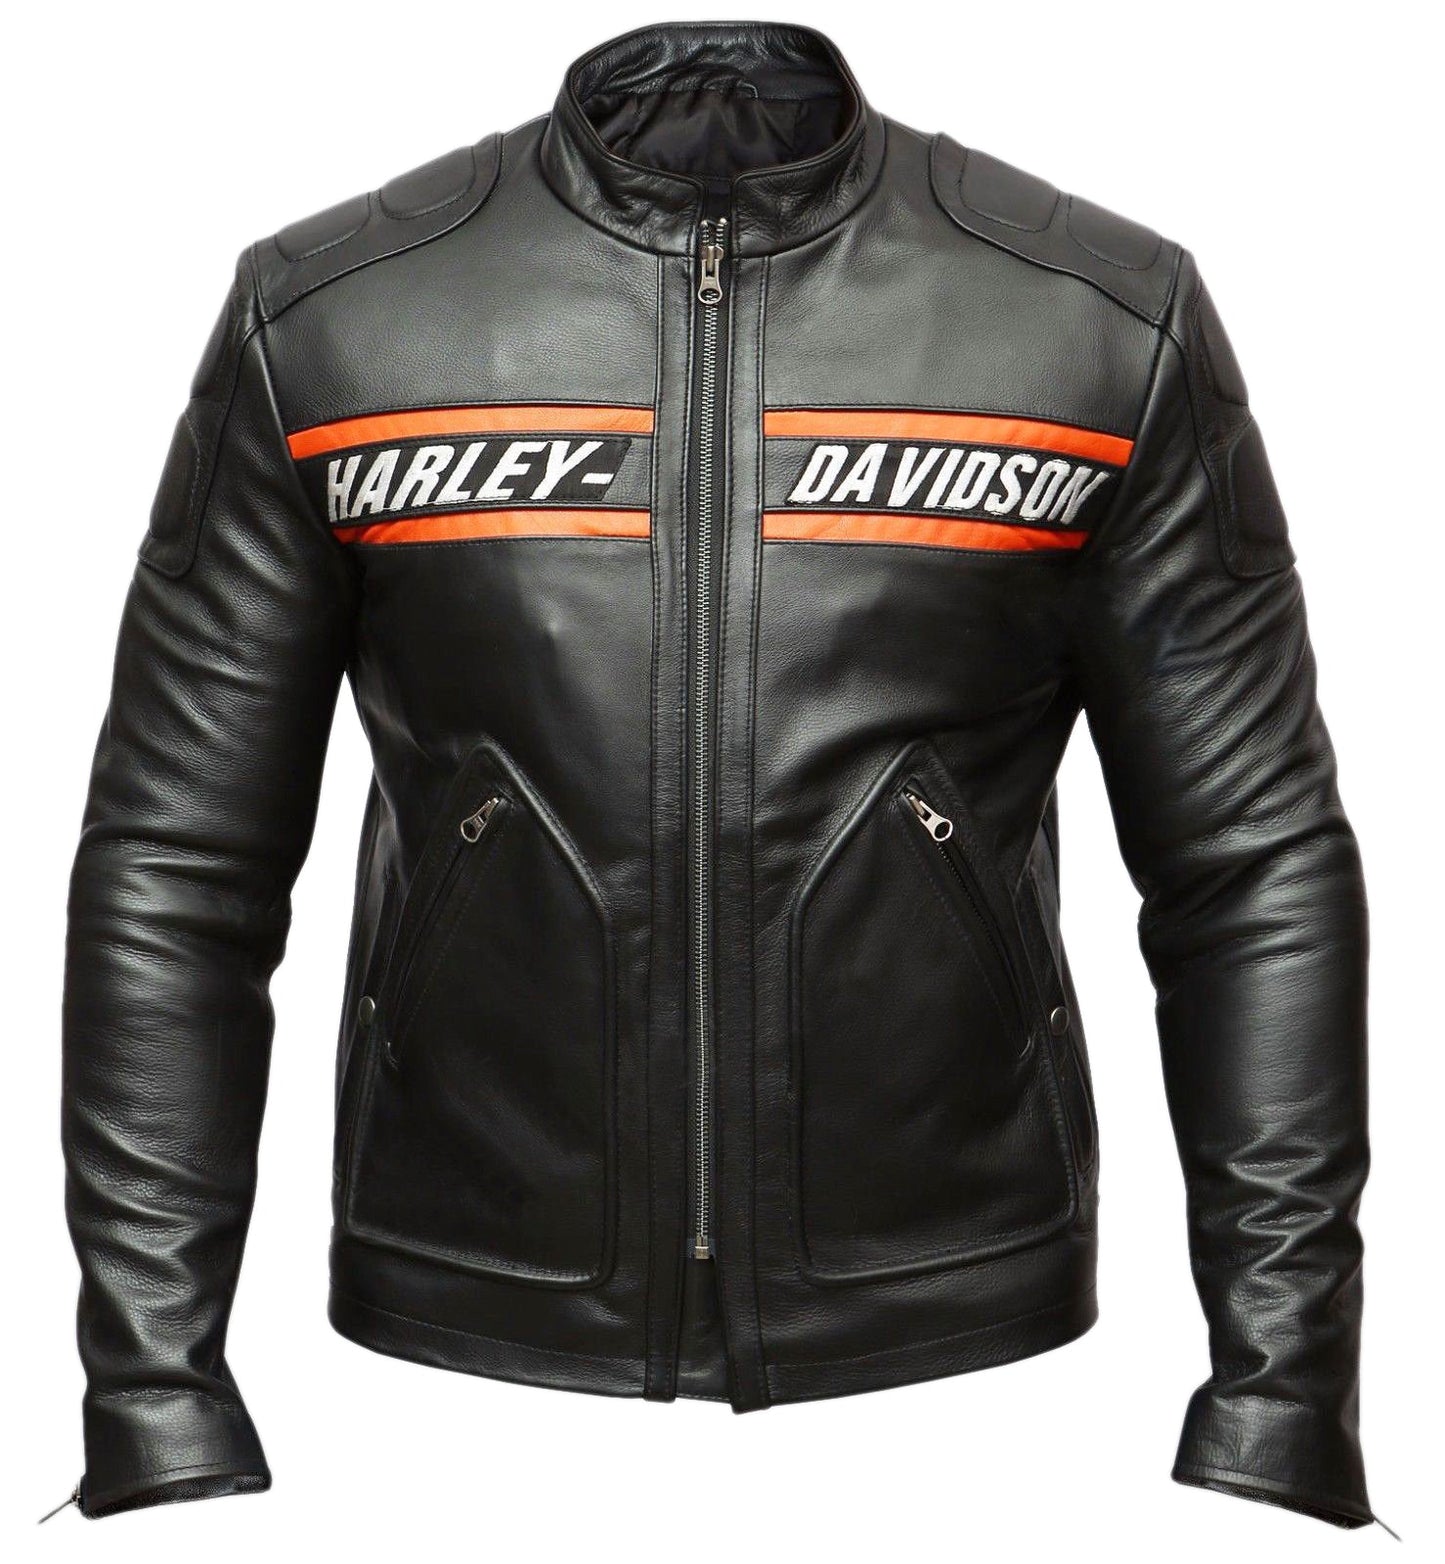 Bill Goldberg Harley Davidson Genuine Leather Motorcycle Jacket - Classic Harley Davidson Biker Jacket - Orange and Black Harley Davidson jacket - 2101001